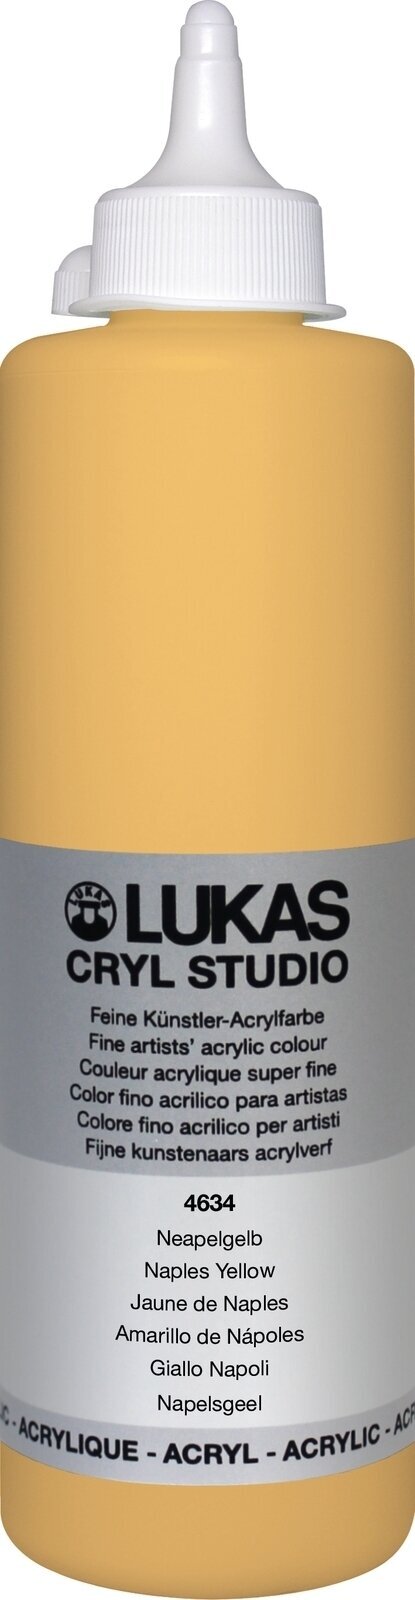 Pintura acrílica Lukas Cryl Studio Acrylic Paint 500 ml Naples Yellow Pintura acrílica